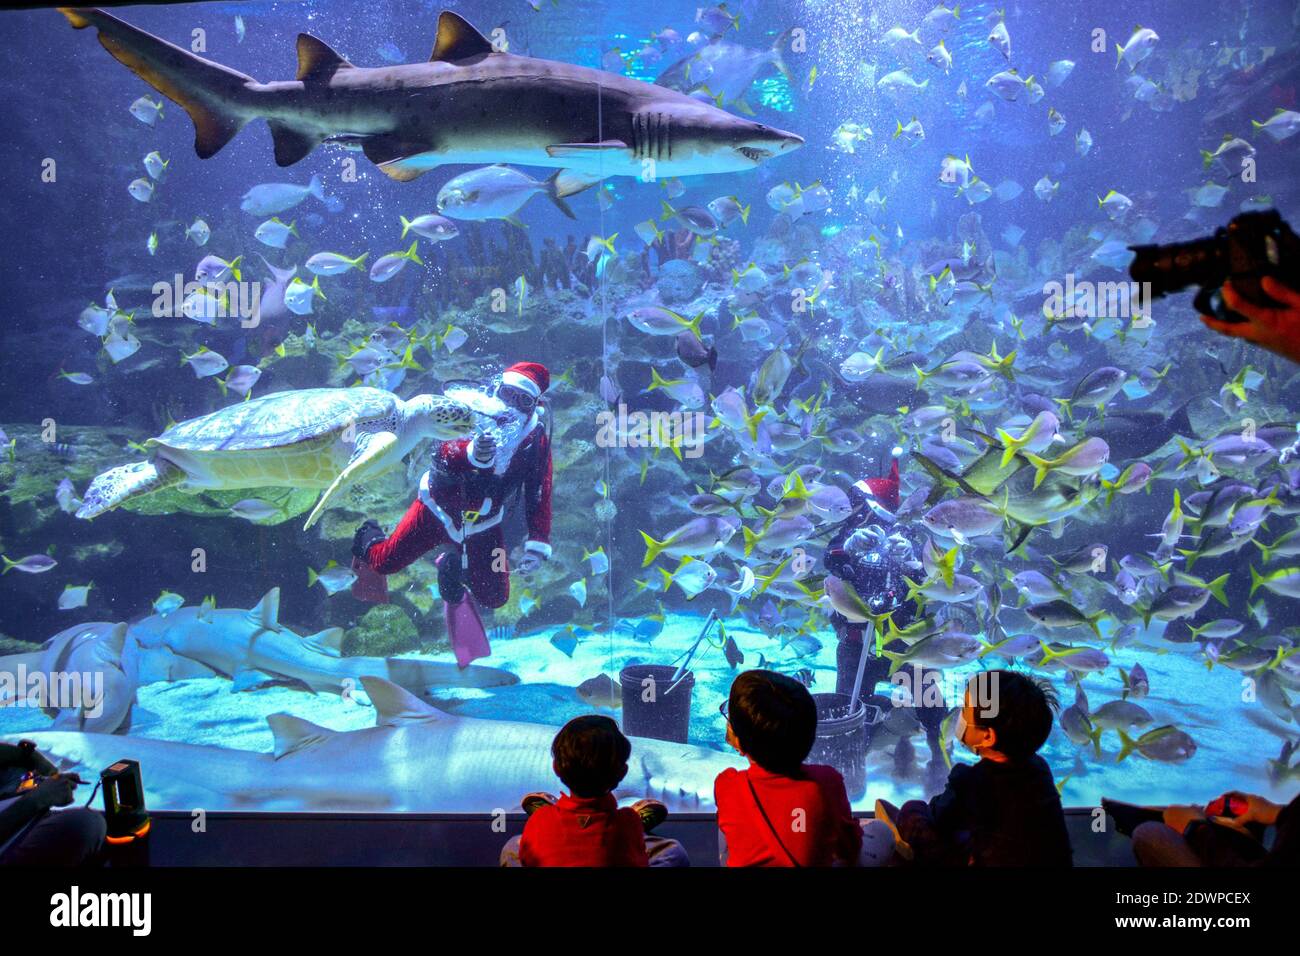 Kuala Lumpur, Malaysia . 23rd Dec, 2020. A scuba diver dressed as Santa Claus feeds a turtle during a performance at Aquaria KLCC aquarium in Kuala Lumpur, Malaysia, Dec. 23, 2020. (Photo by Chong Voon Chung/Xinhua) Credit: Xinhua/Alamy Live News Stock Photo